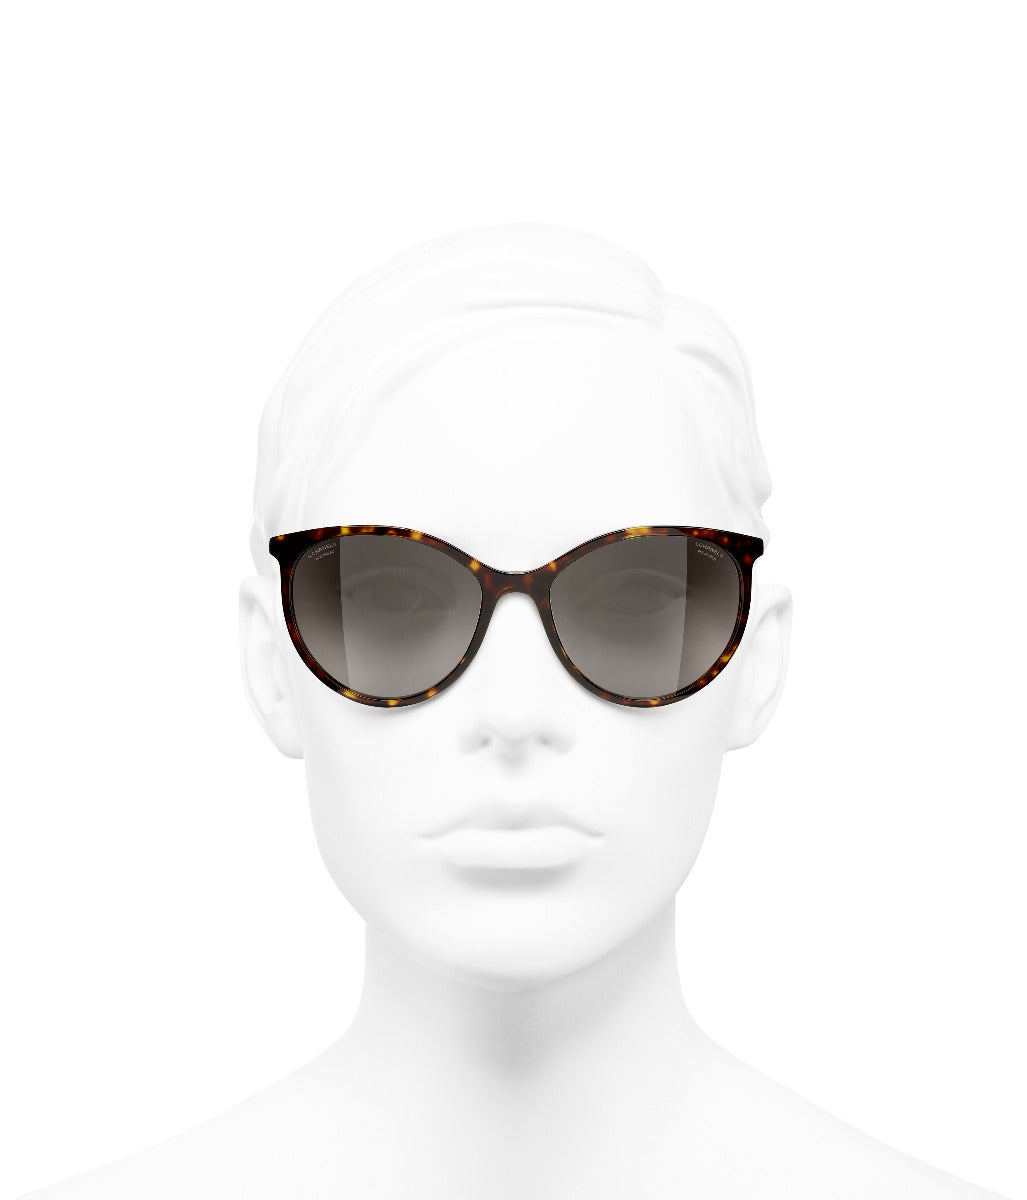 Chanel 5440 1643/80 Sunglasses